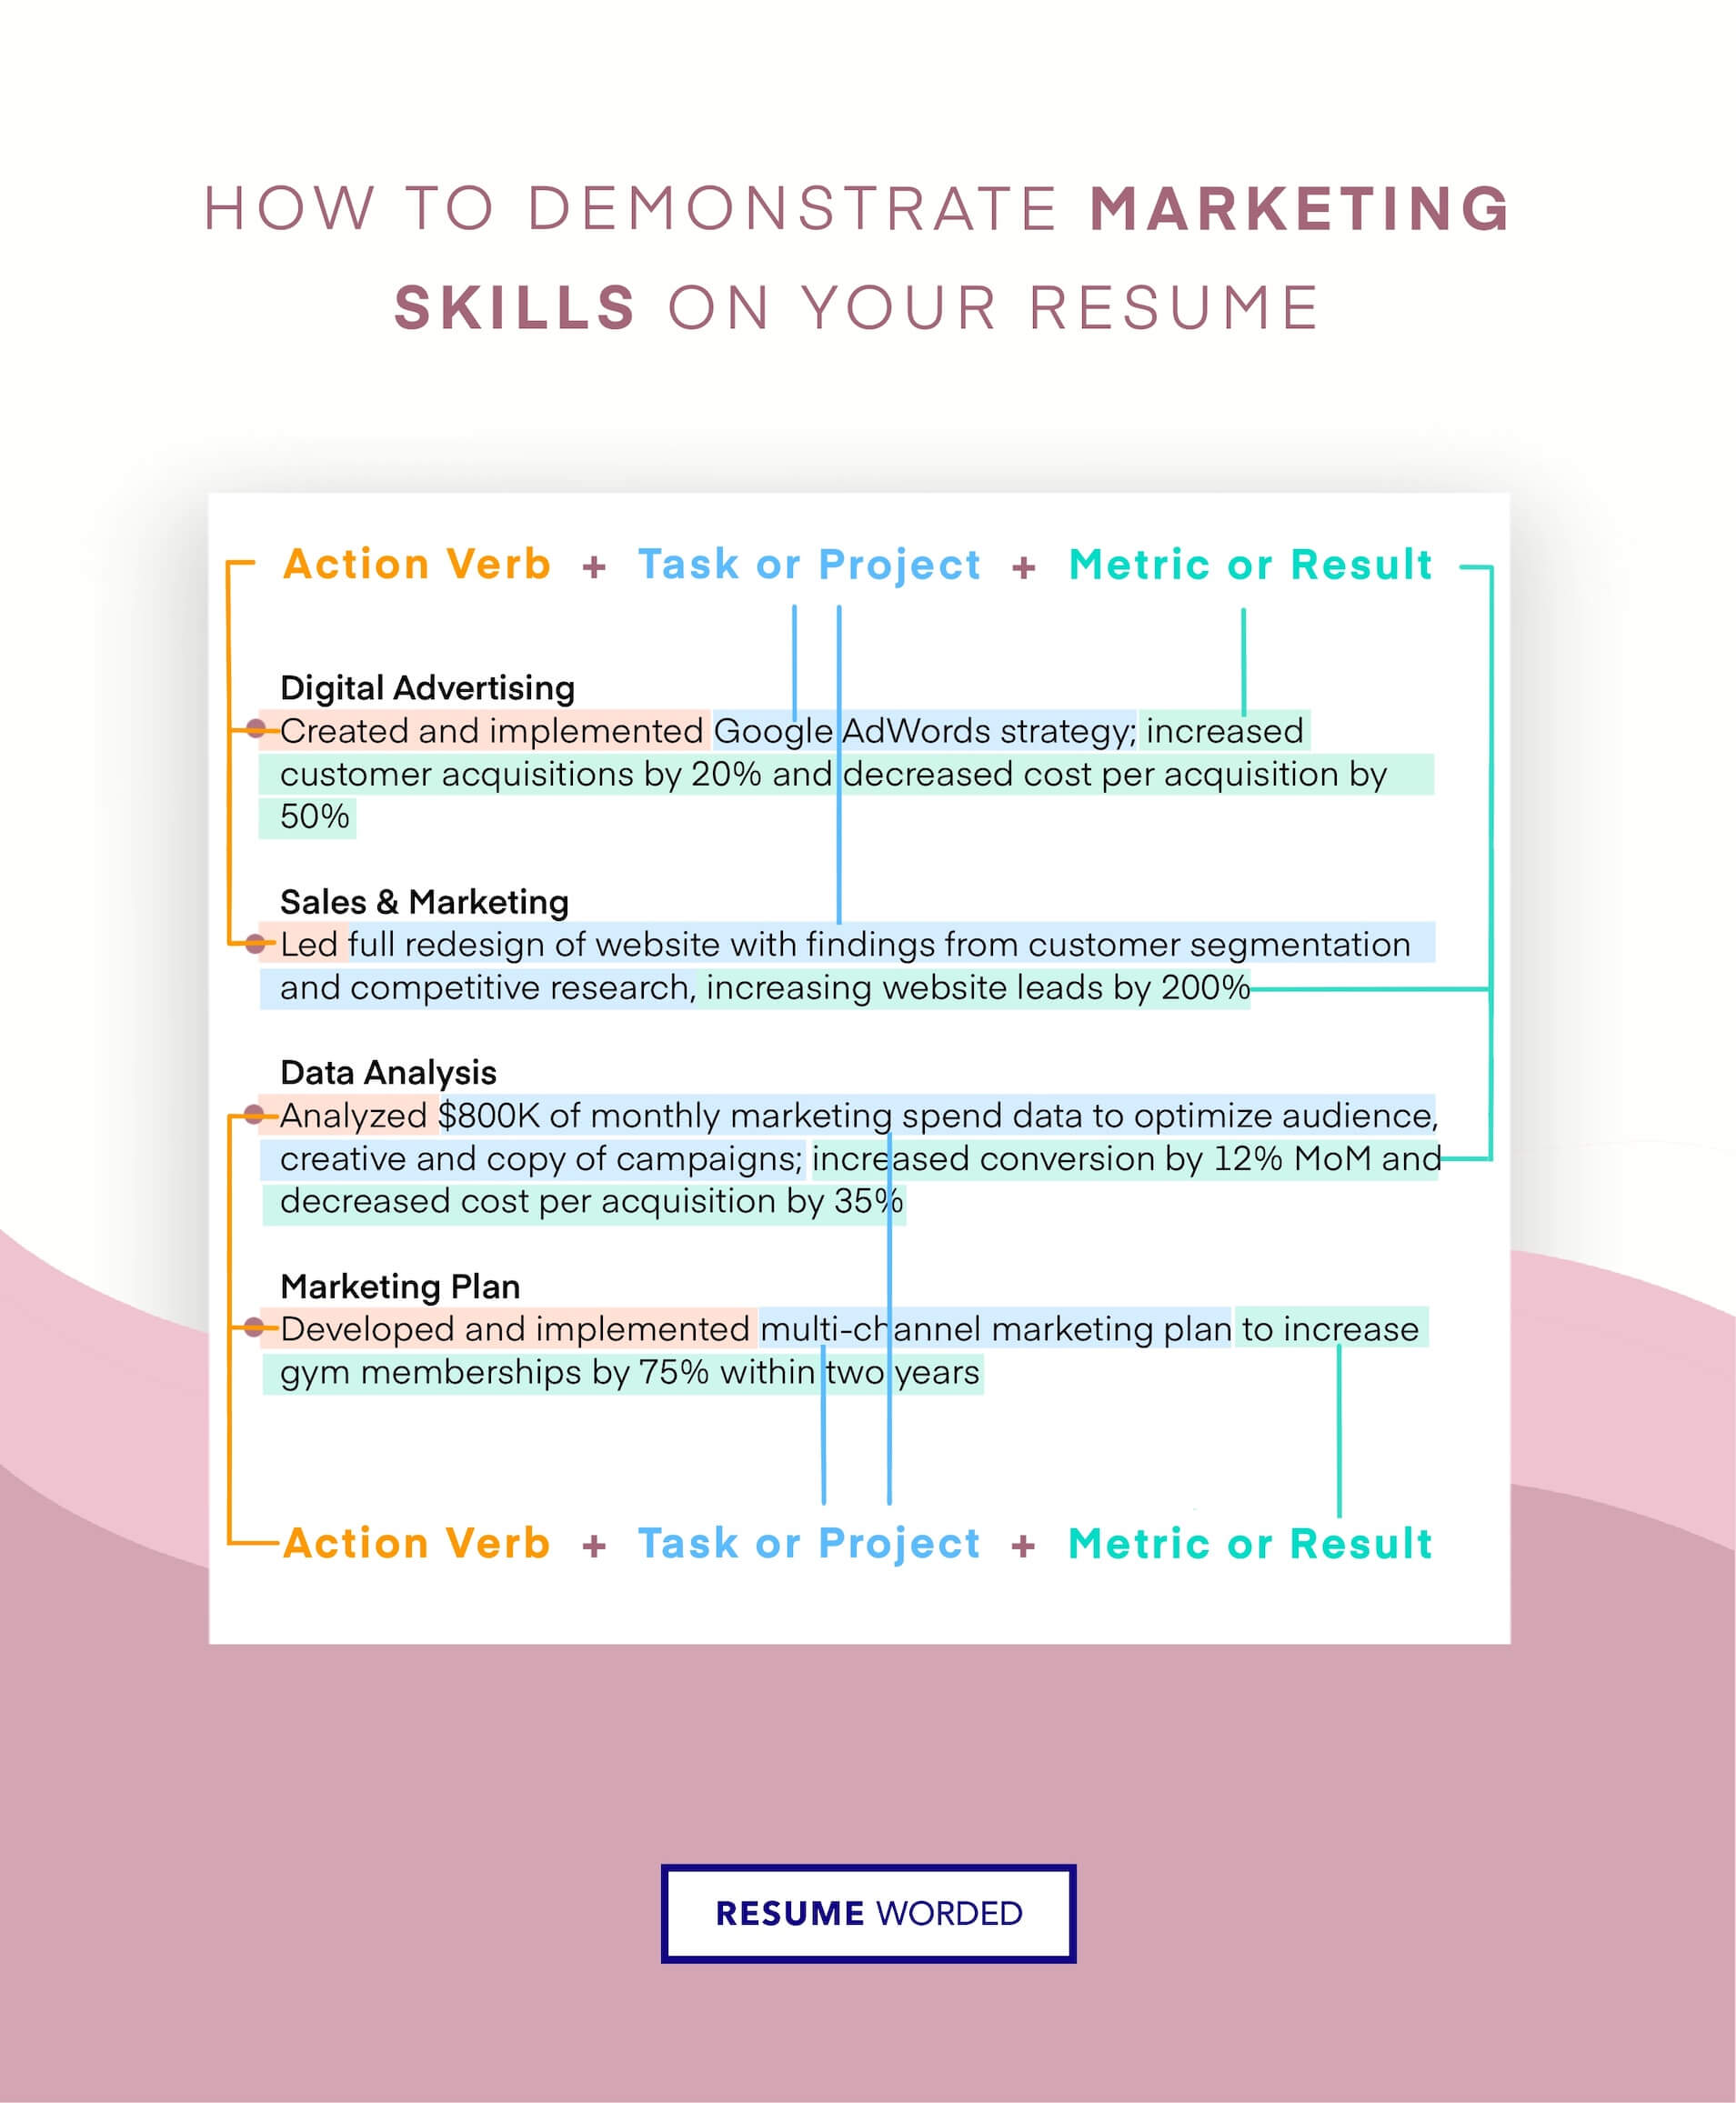 Strong section of hard skills relevant to digital marketing - Senior Digital Marketing Manager Resume